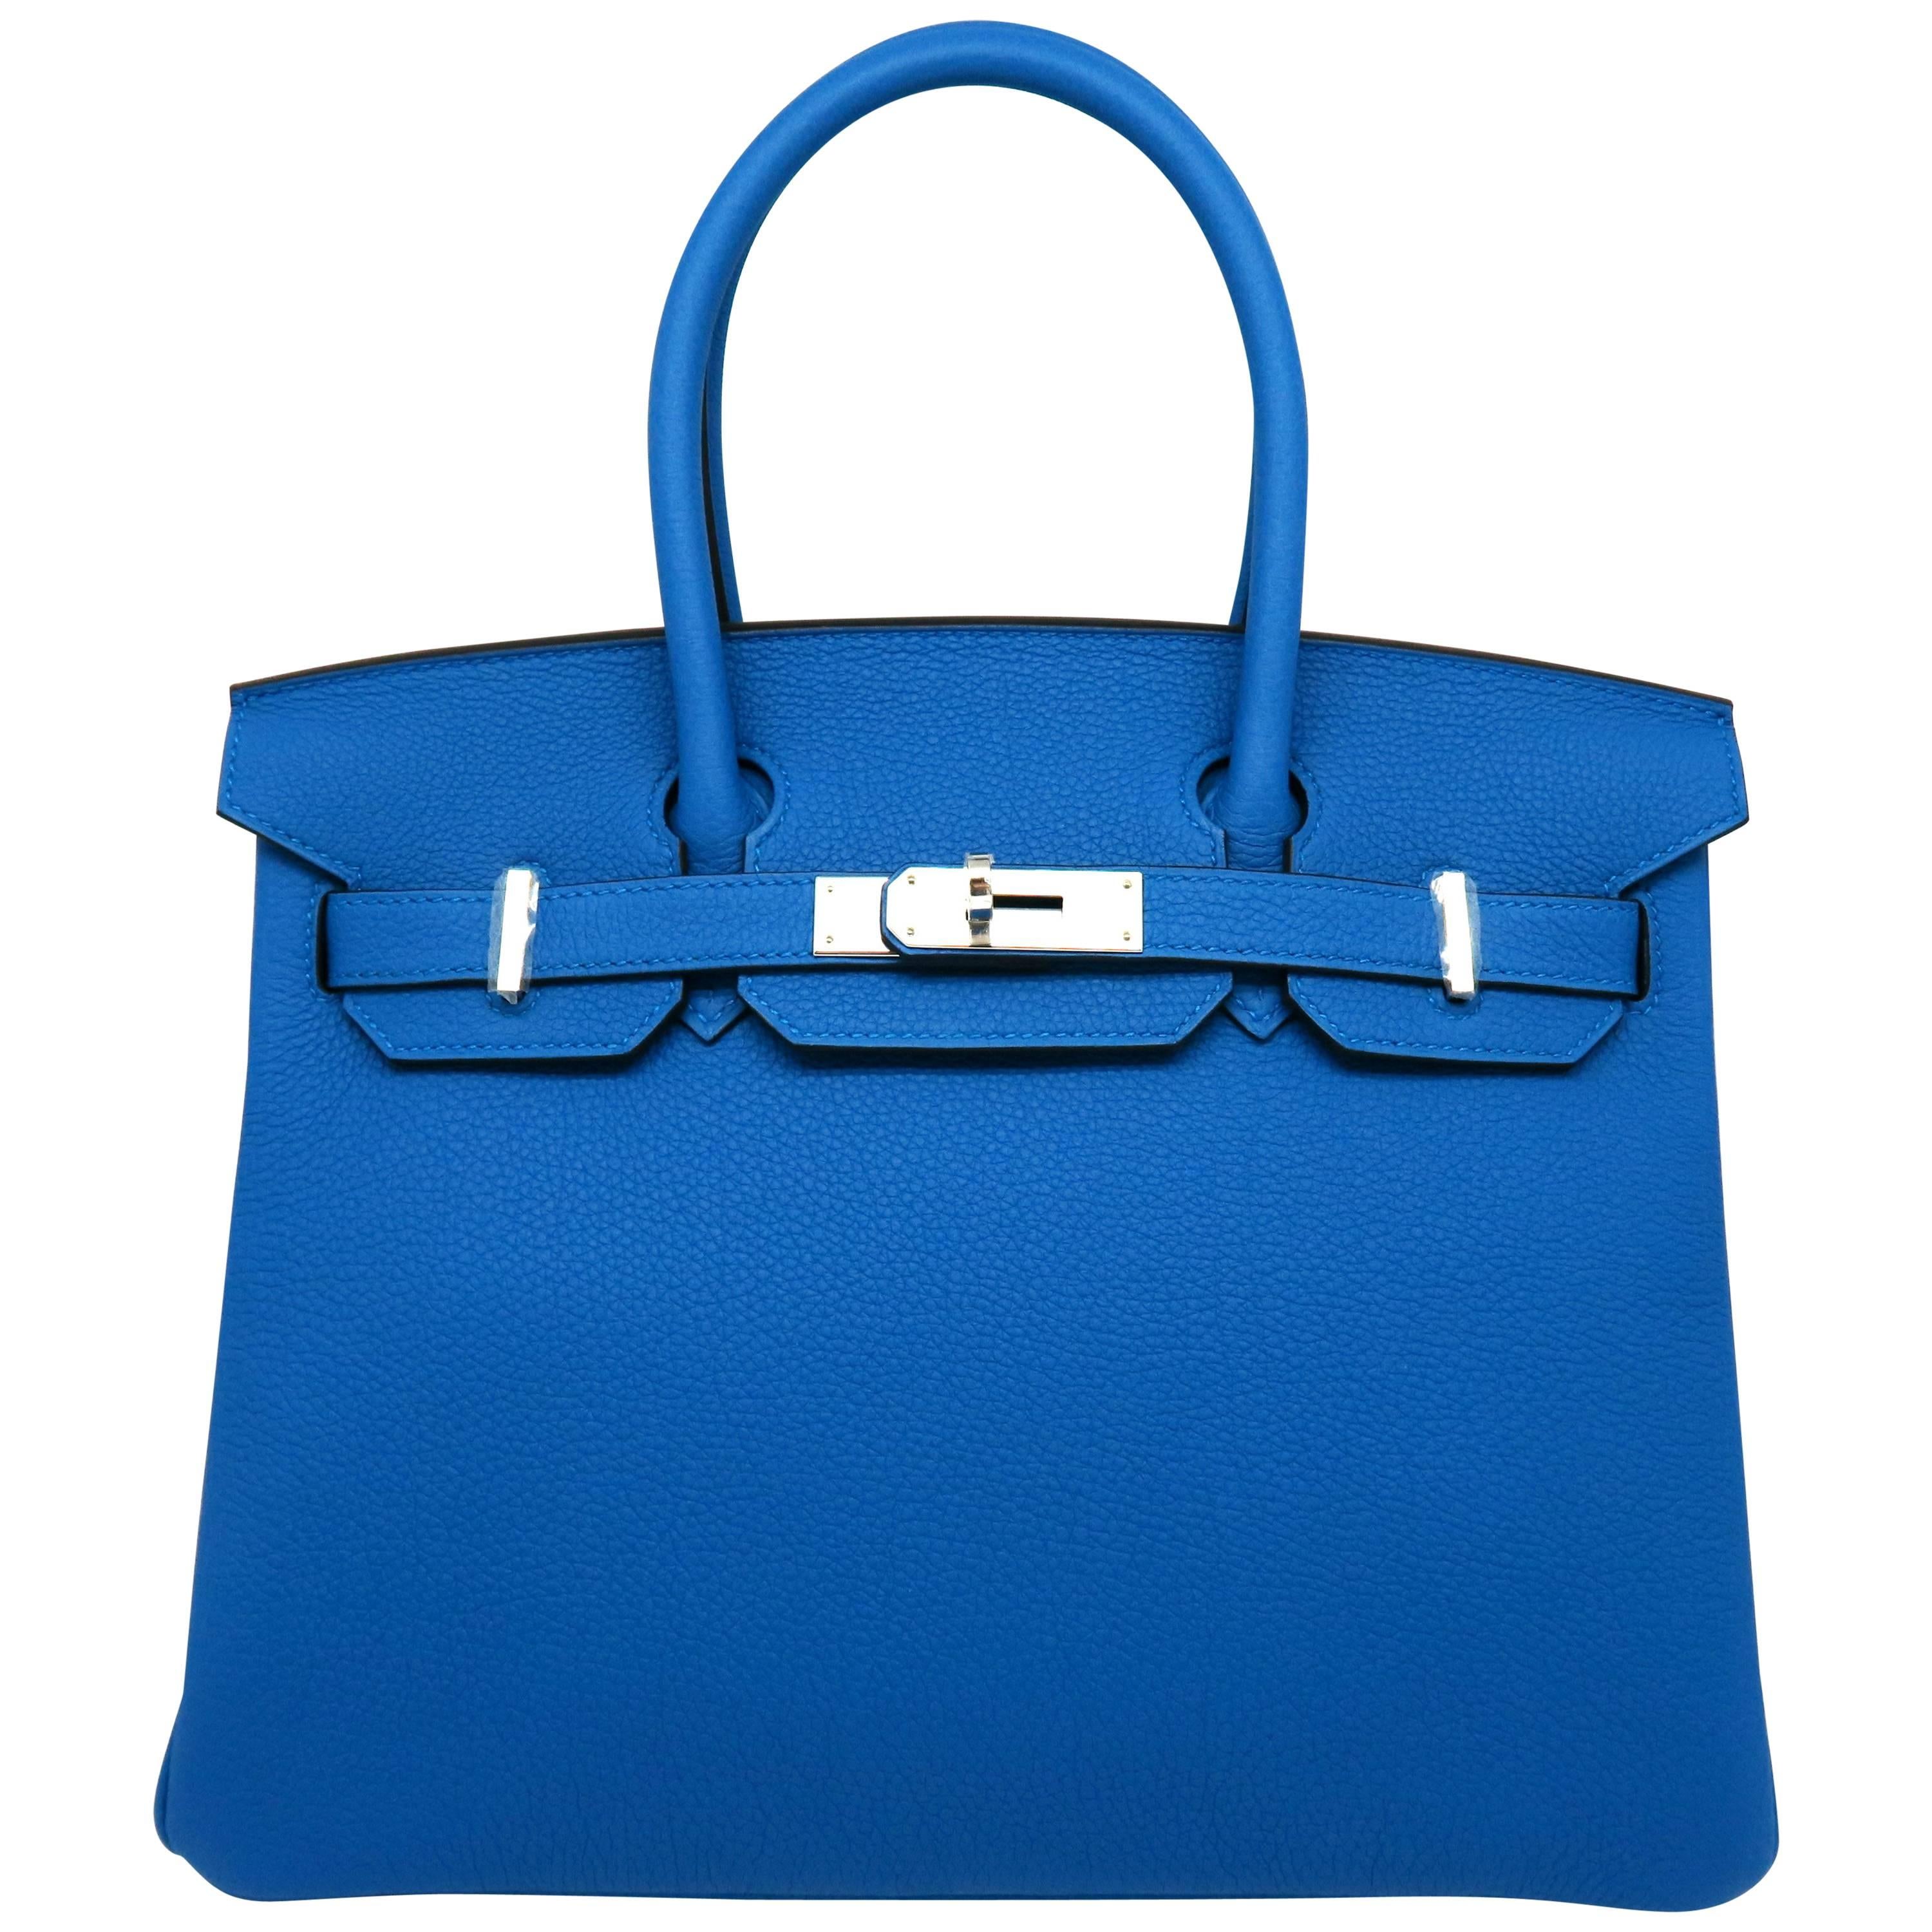 Hermes Birkin 30 Bleu Zanzibar Blue Togo Leather SHW Top Handle Bag